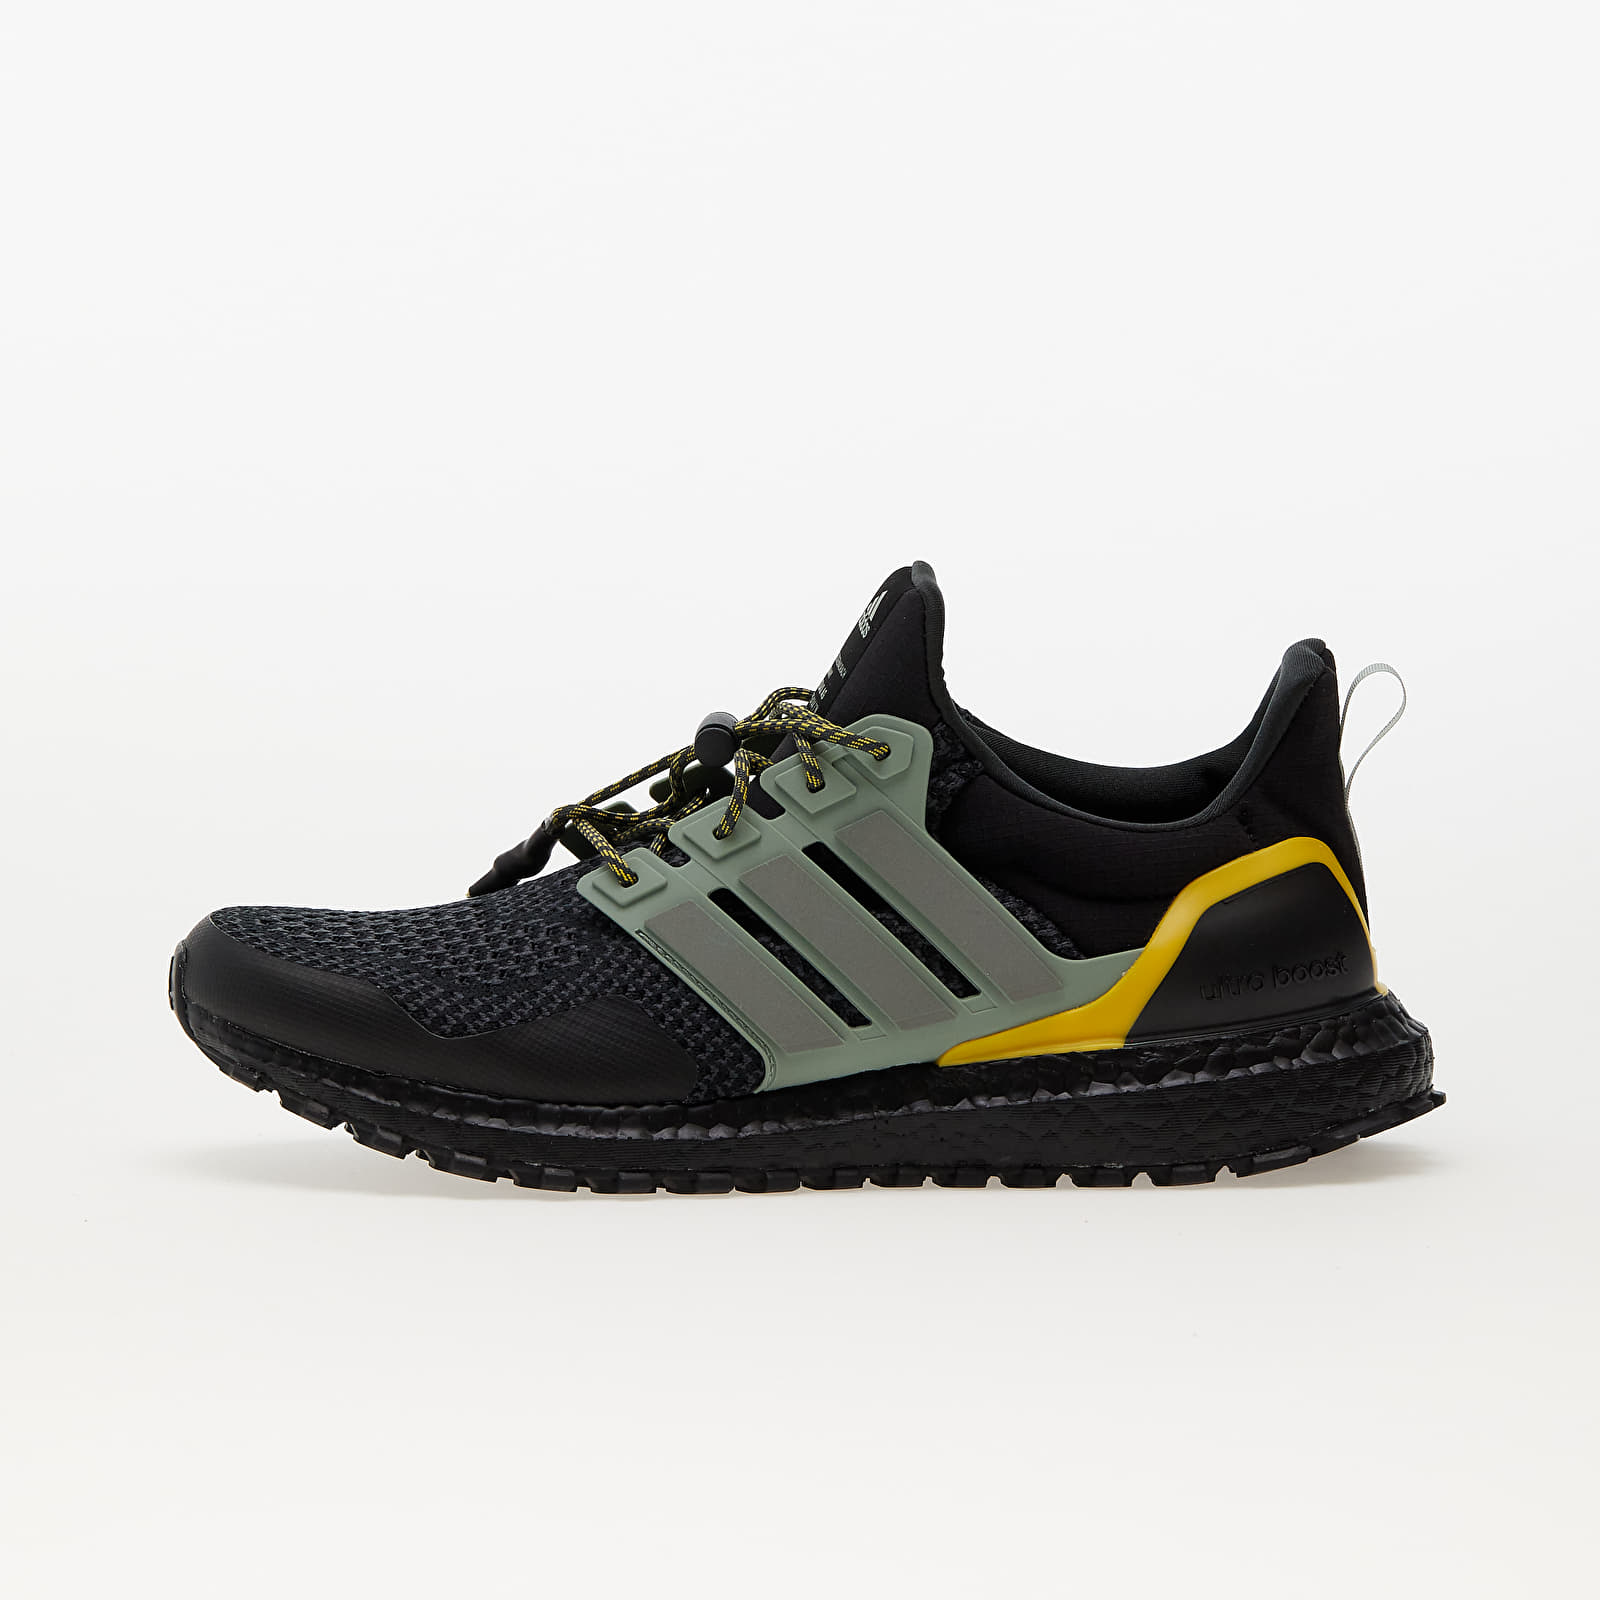 Men's shoes adidas UltraBOOST 1.0 Core Black/ Silver Green/ Carbon